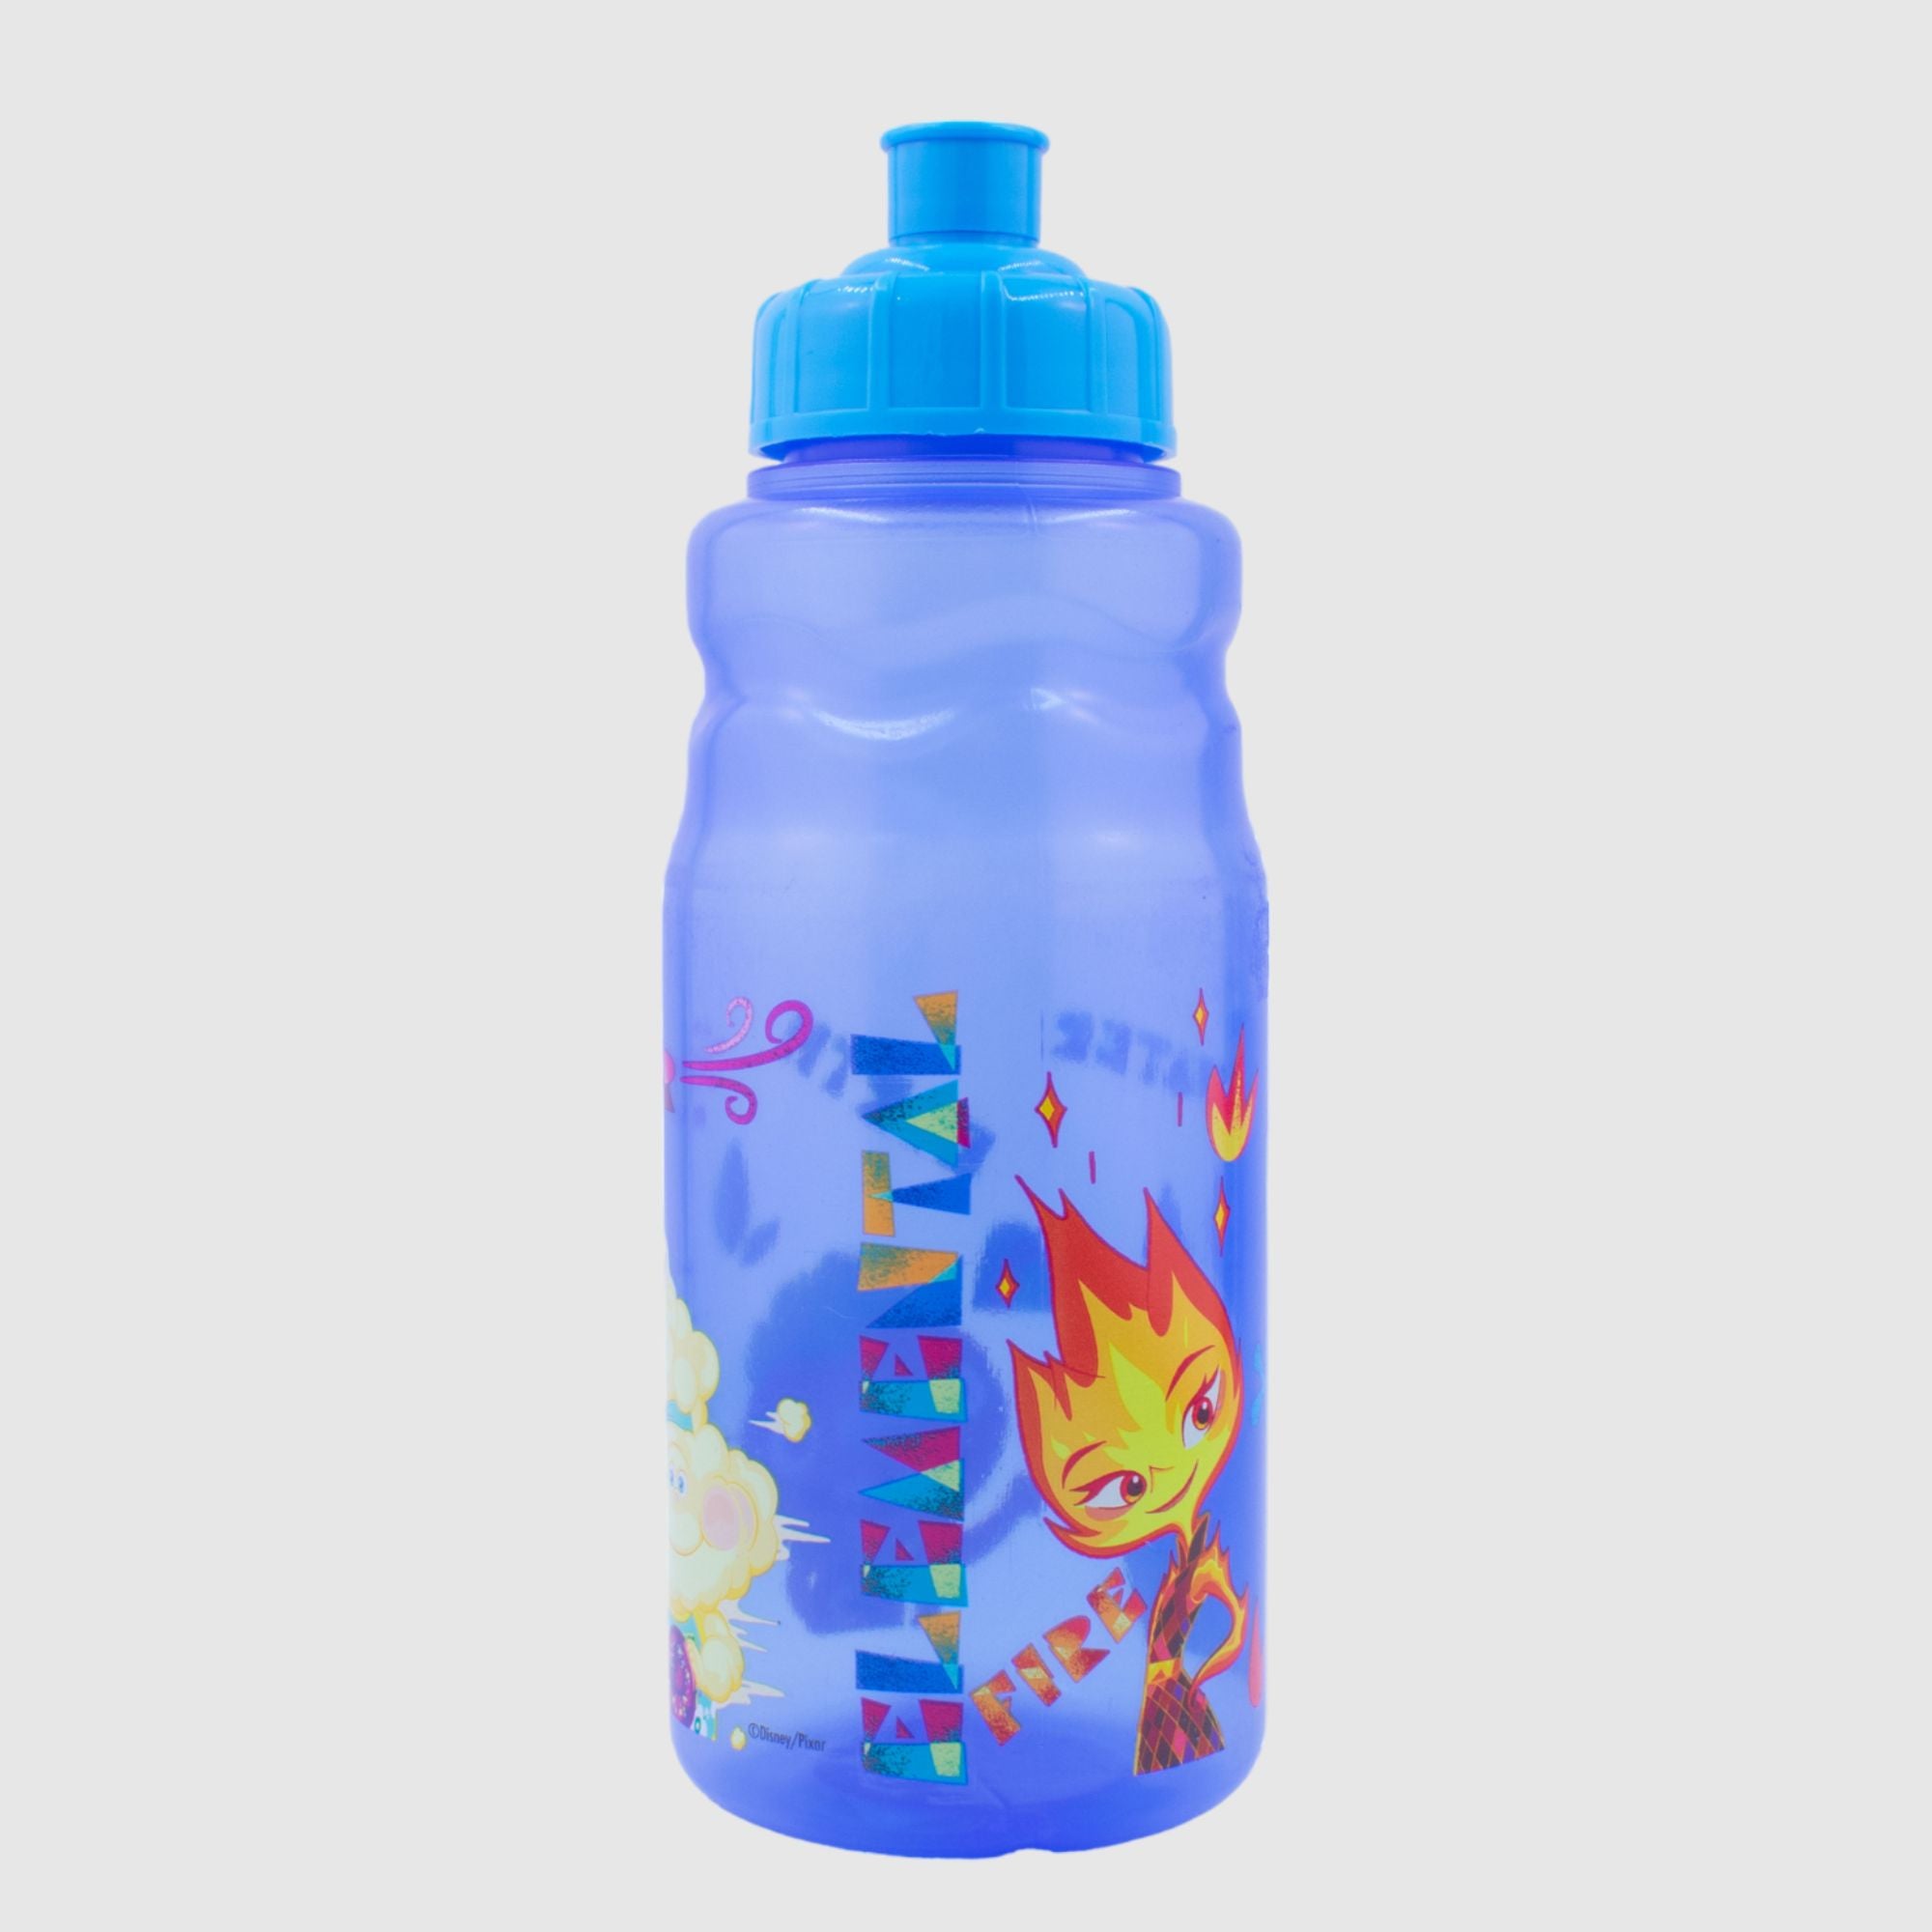 Botella De Plástico Infantil pelicula pixar elemental 510ml